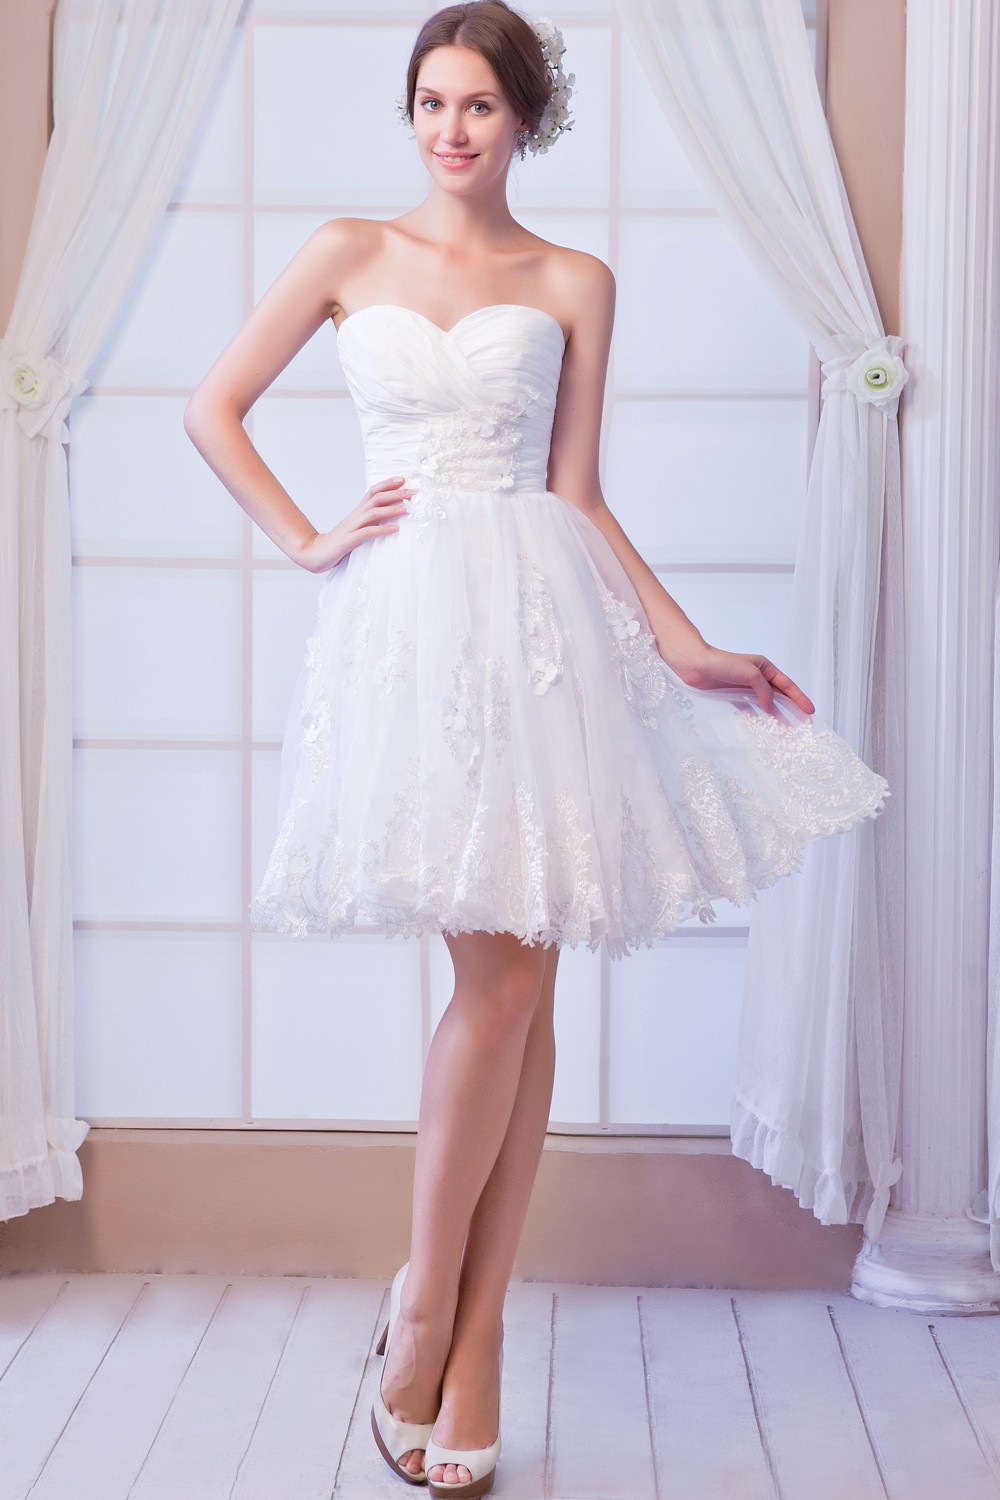 Alanre Deep Scallop Appliques Lace Short Sleeve Plus Size Beach Wedding Dress For Bride At Amazon Women S Clothing Store